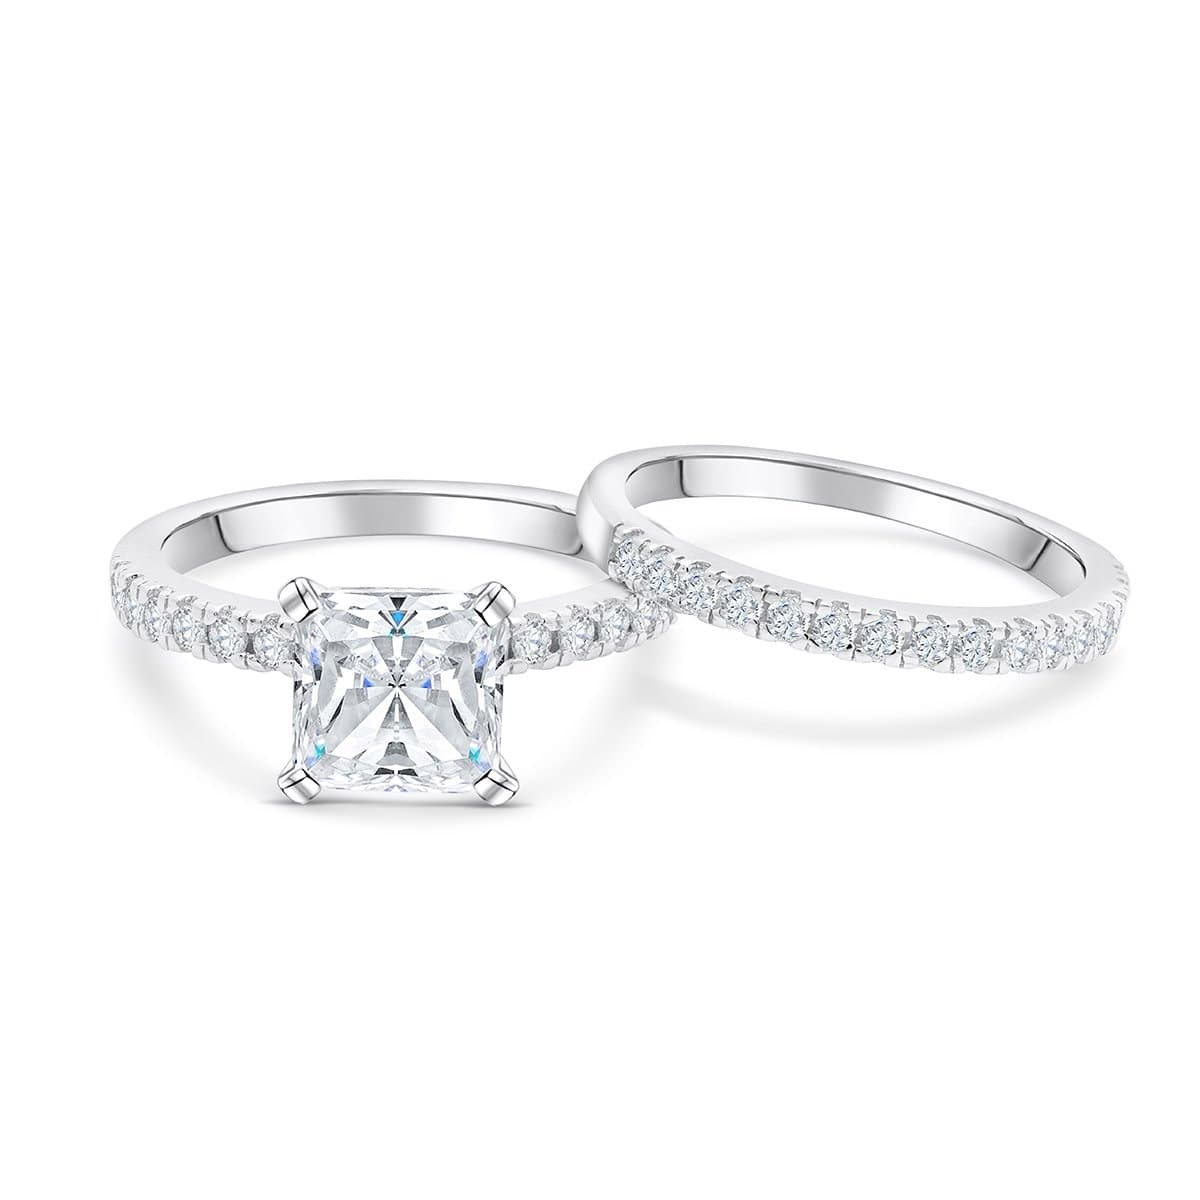 the amore silver princess cut ring set